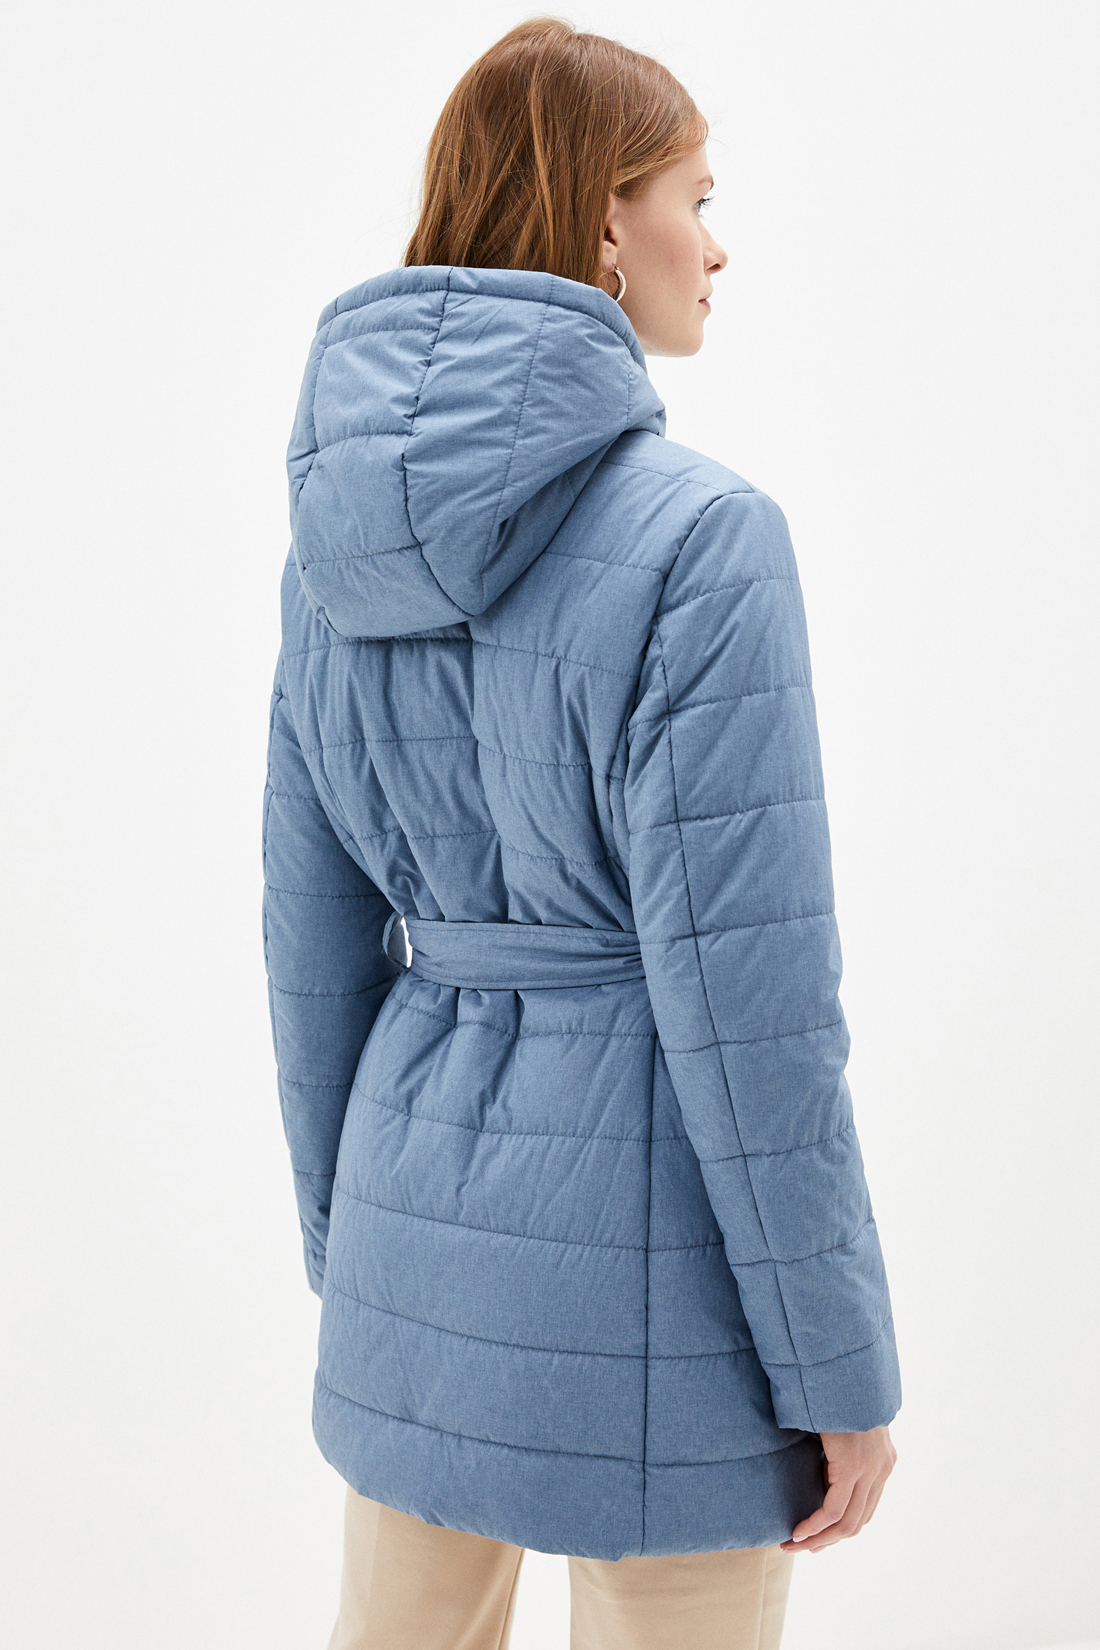 Куртка с поясом (арт. baon B030038), размер M, цвет синий Куртка с поясом (арт. baon B030038) - фото 2